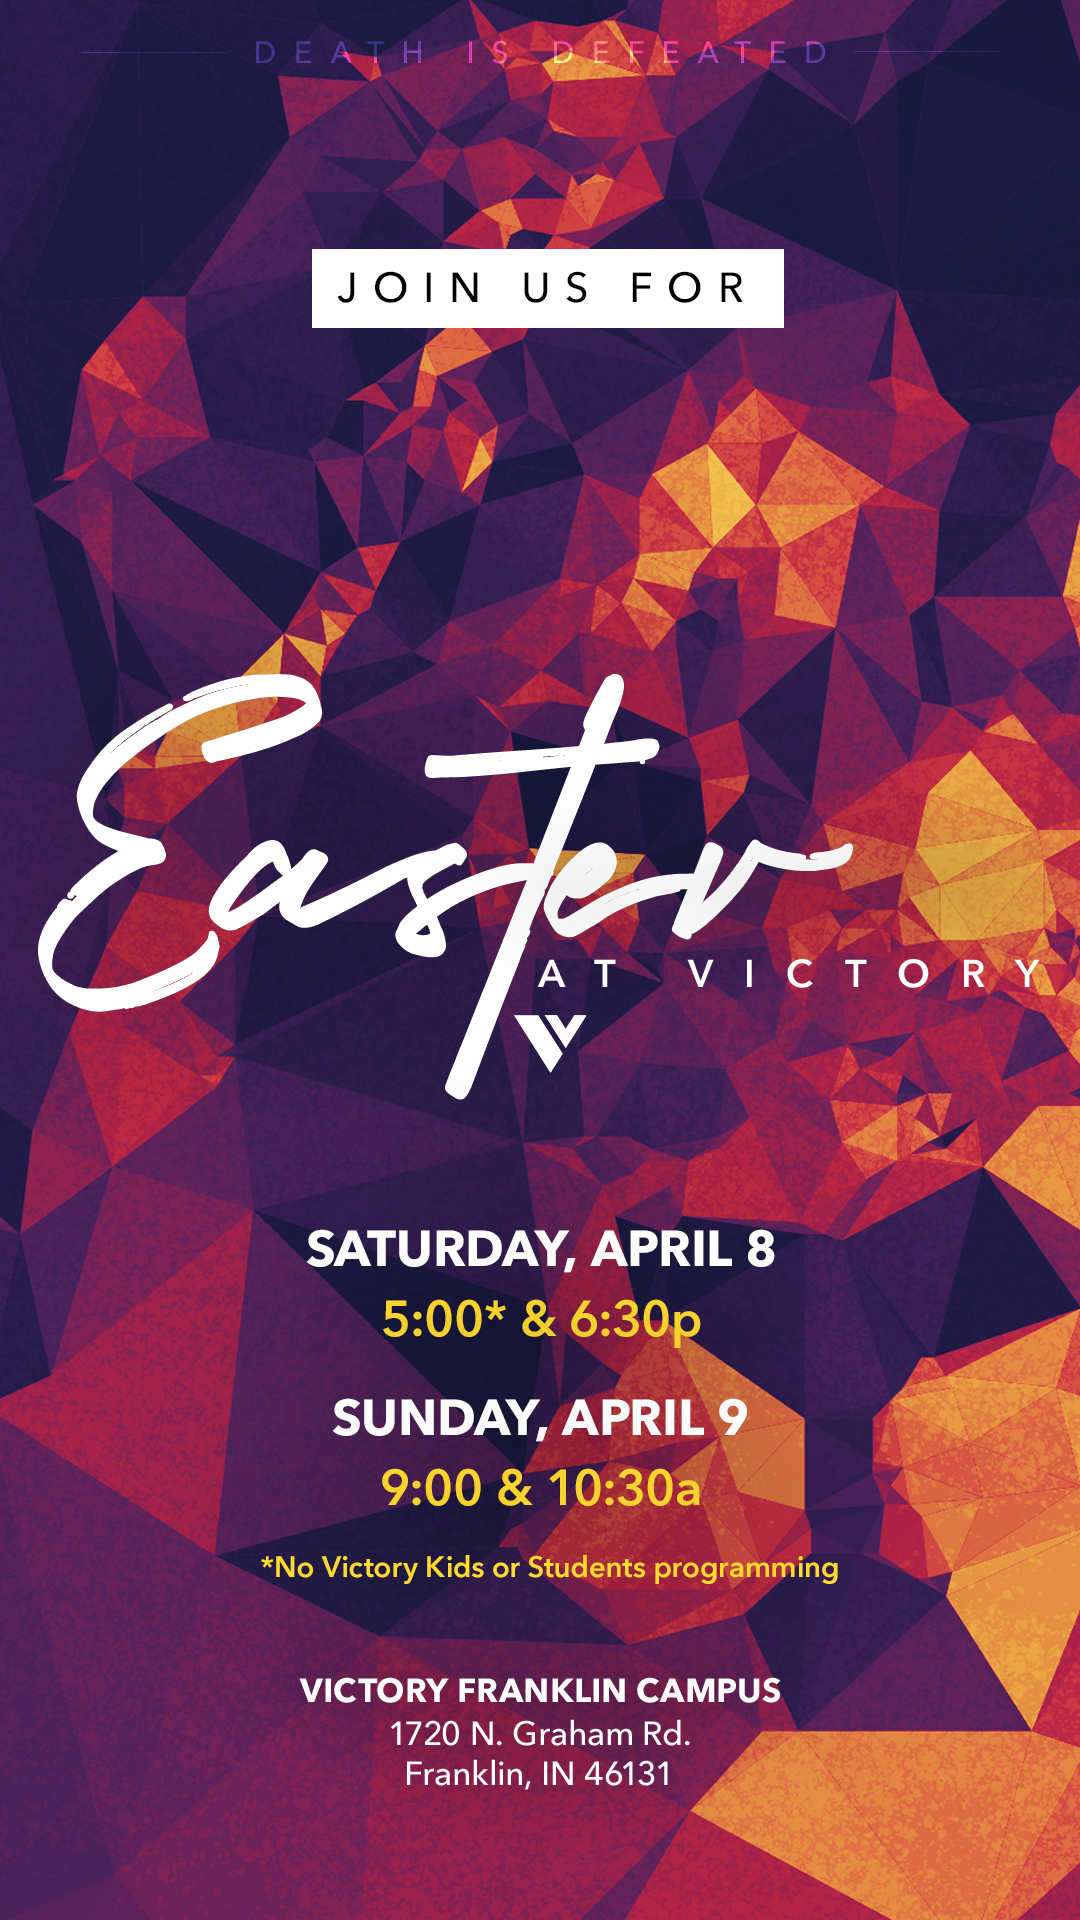 Easter Invite